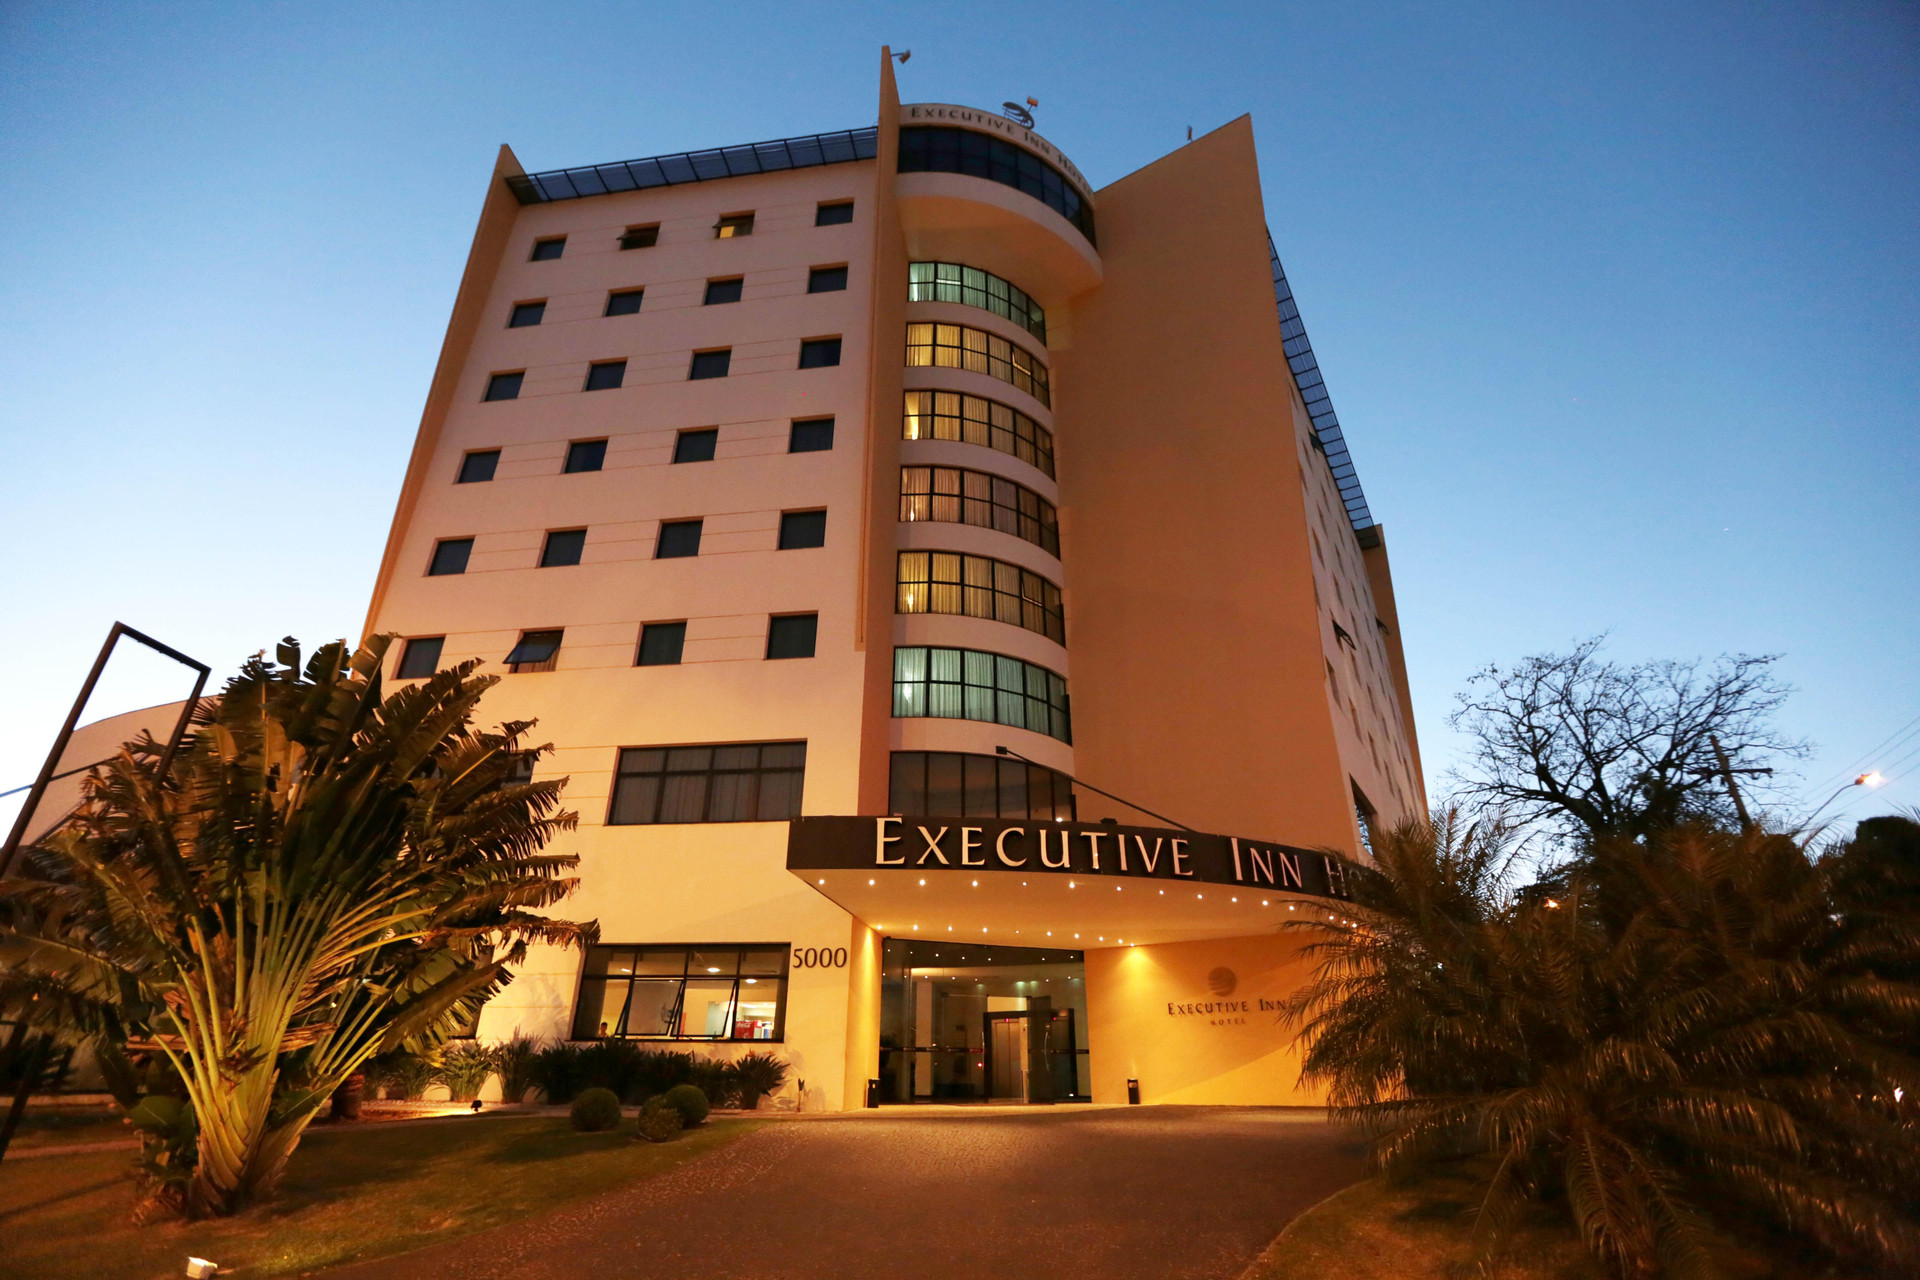 Vista da fachada Executive Inn Hotel